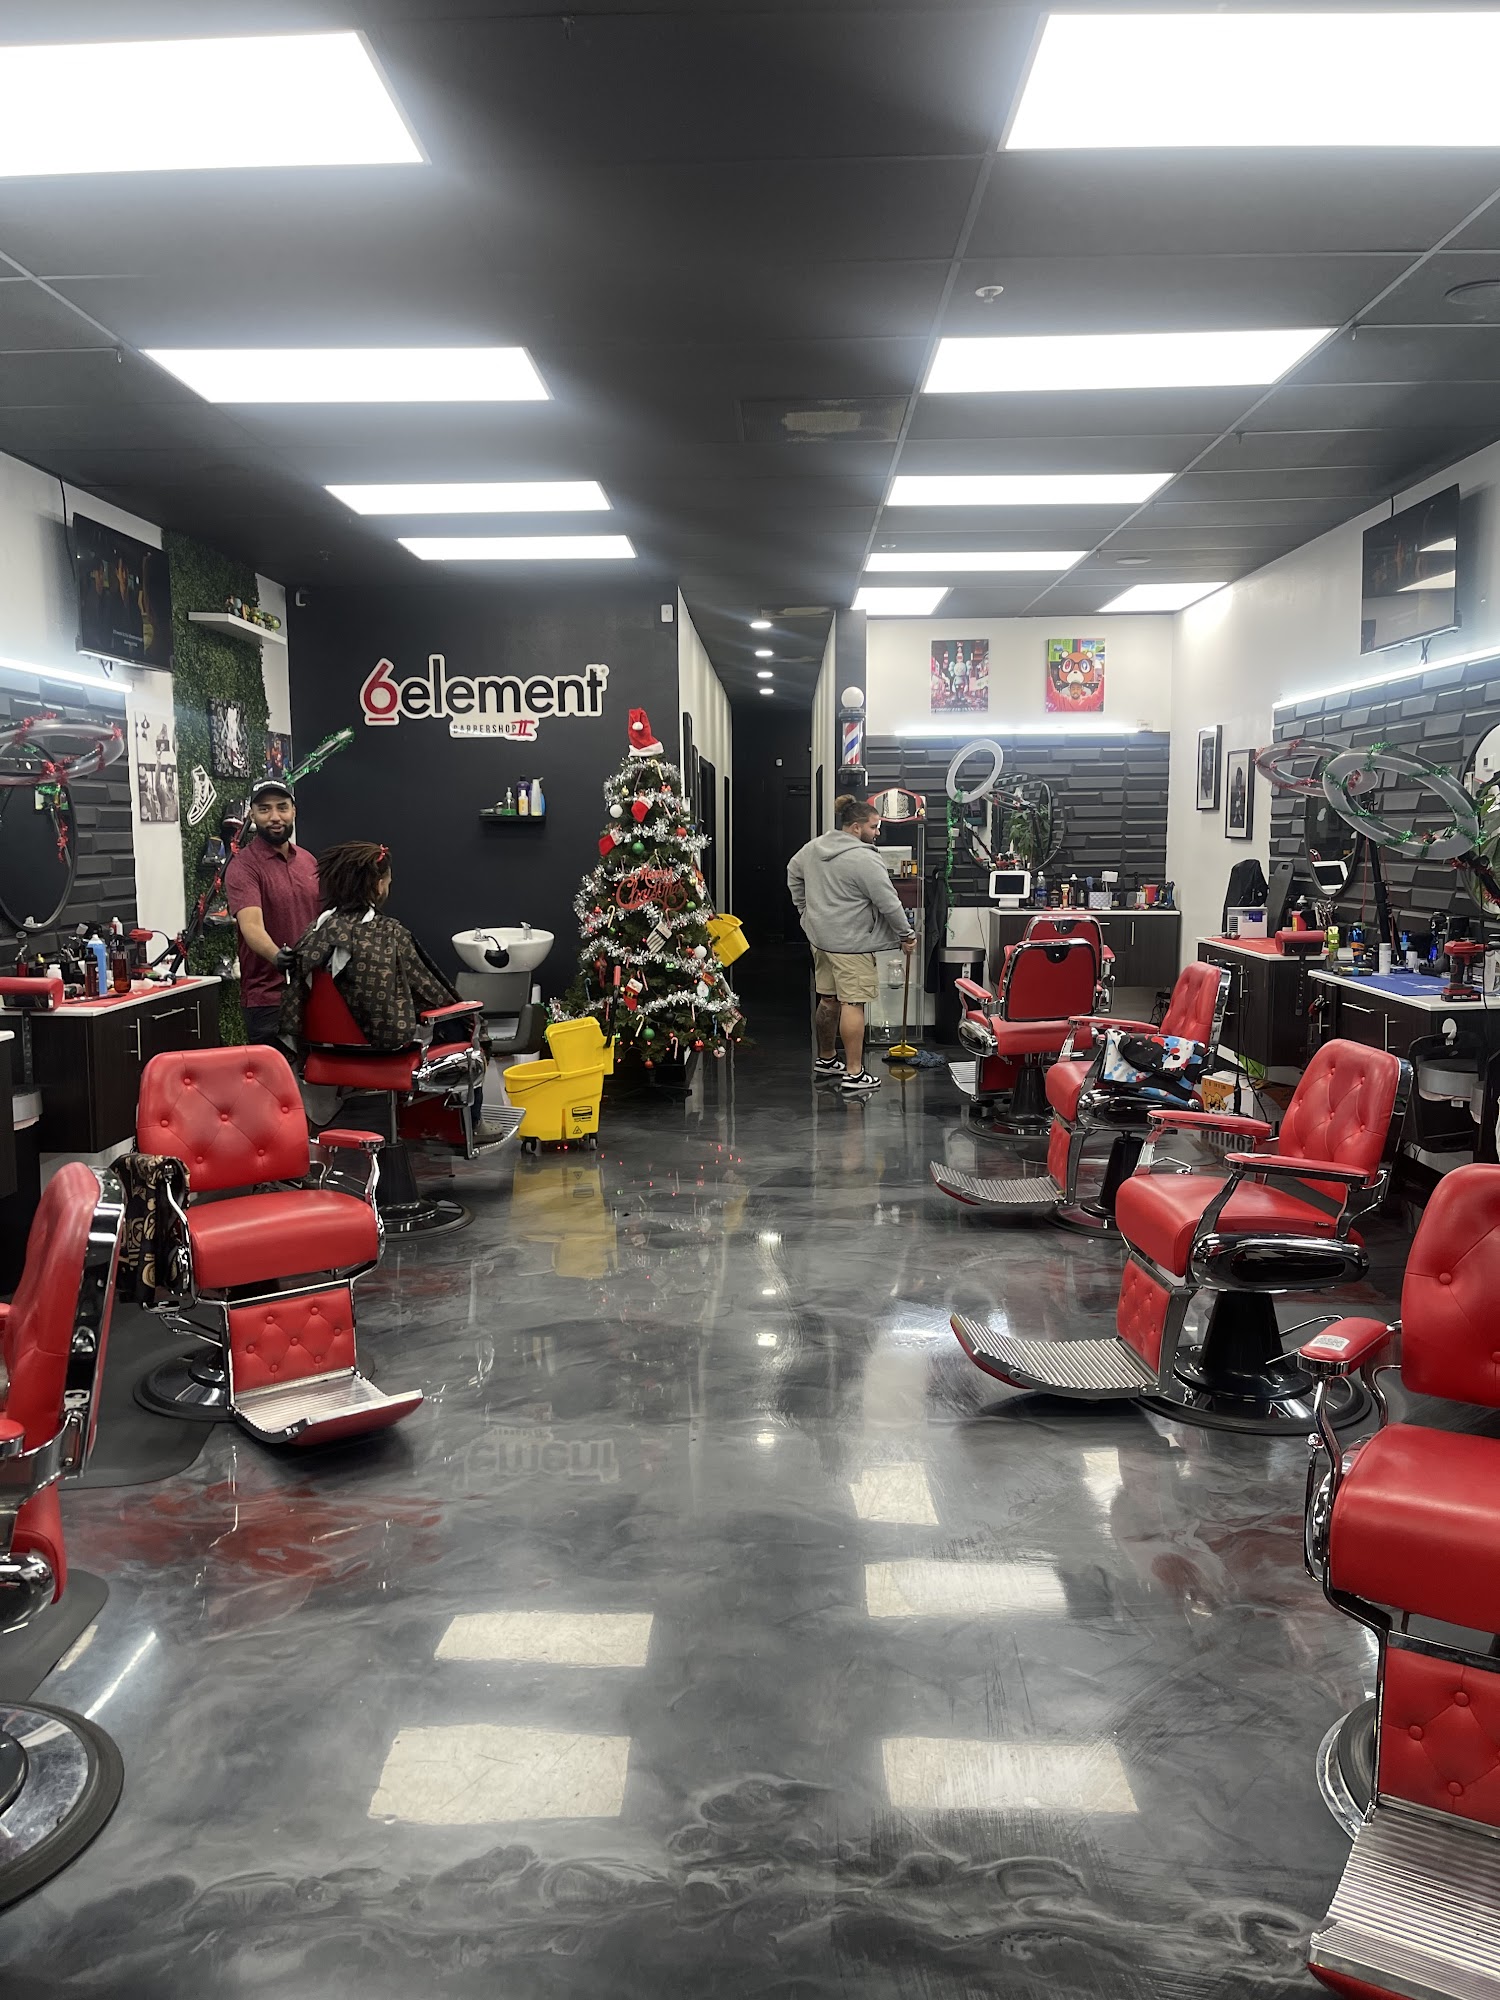 6element barbershop 2